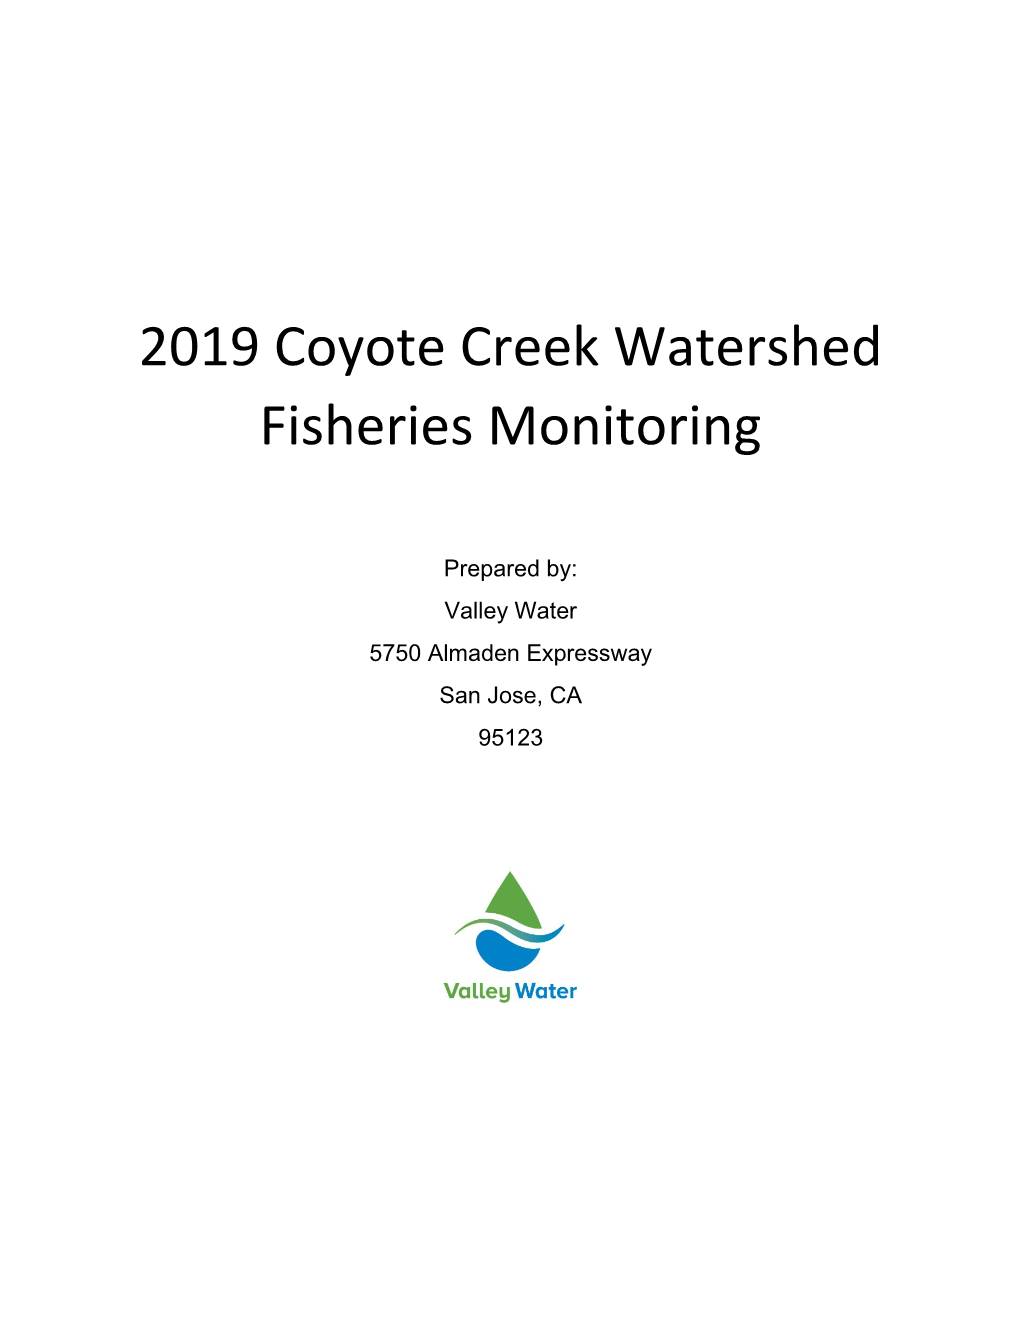 2019 Coyote Creek Watershed Fisheries Monitoring